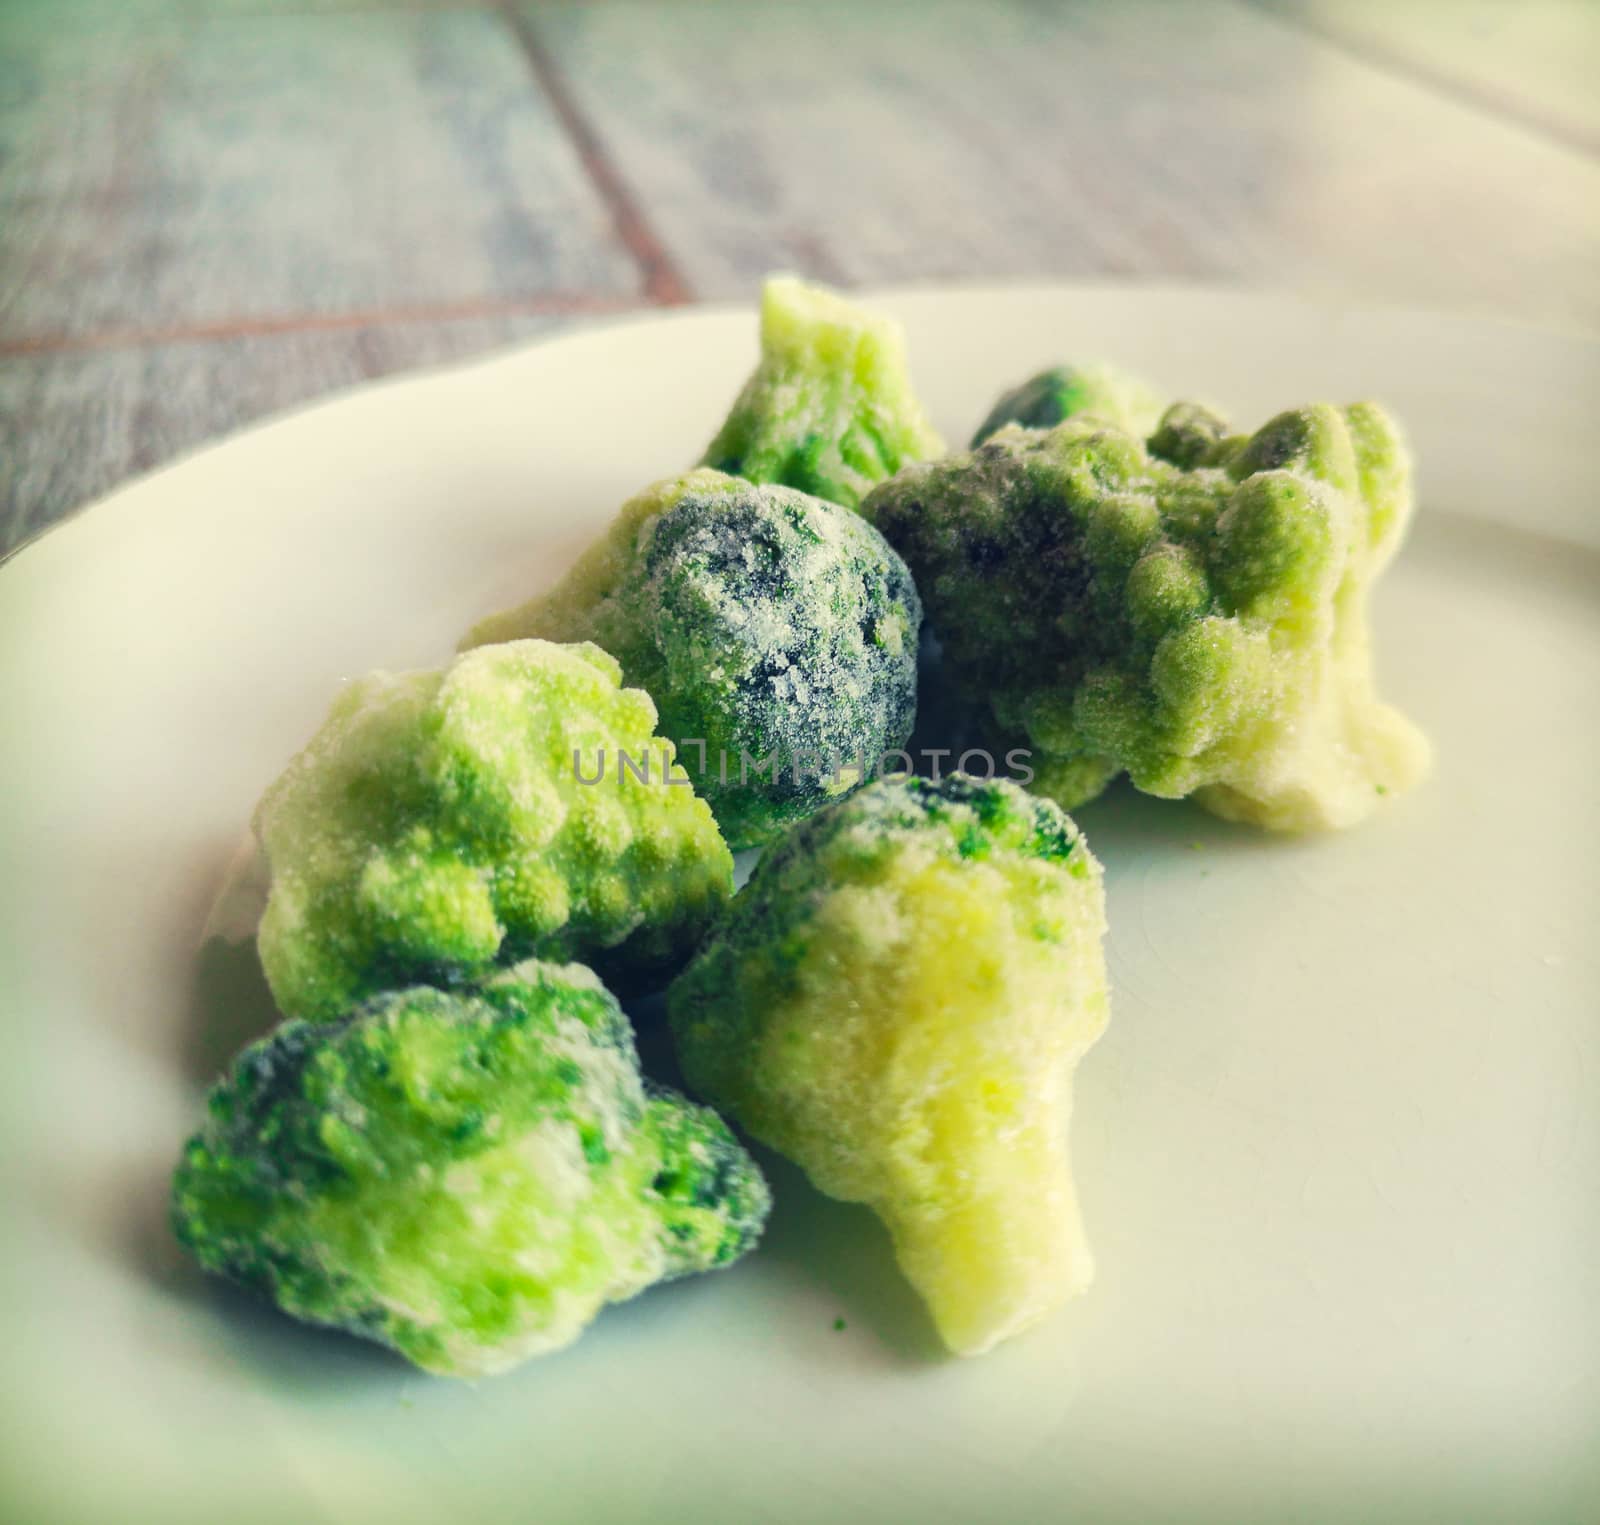 frosted broccoli frozen veggies icing in freezer fridge .